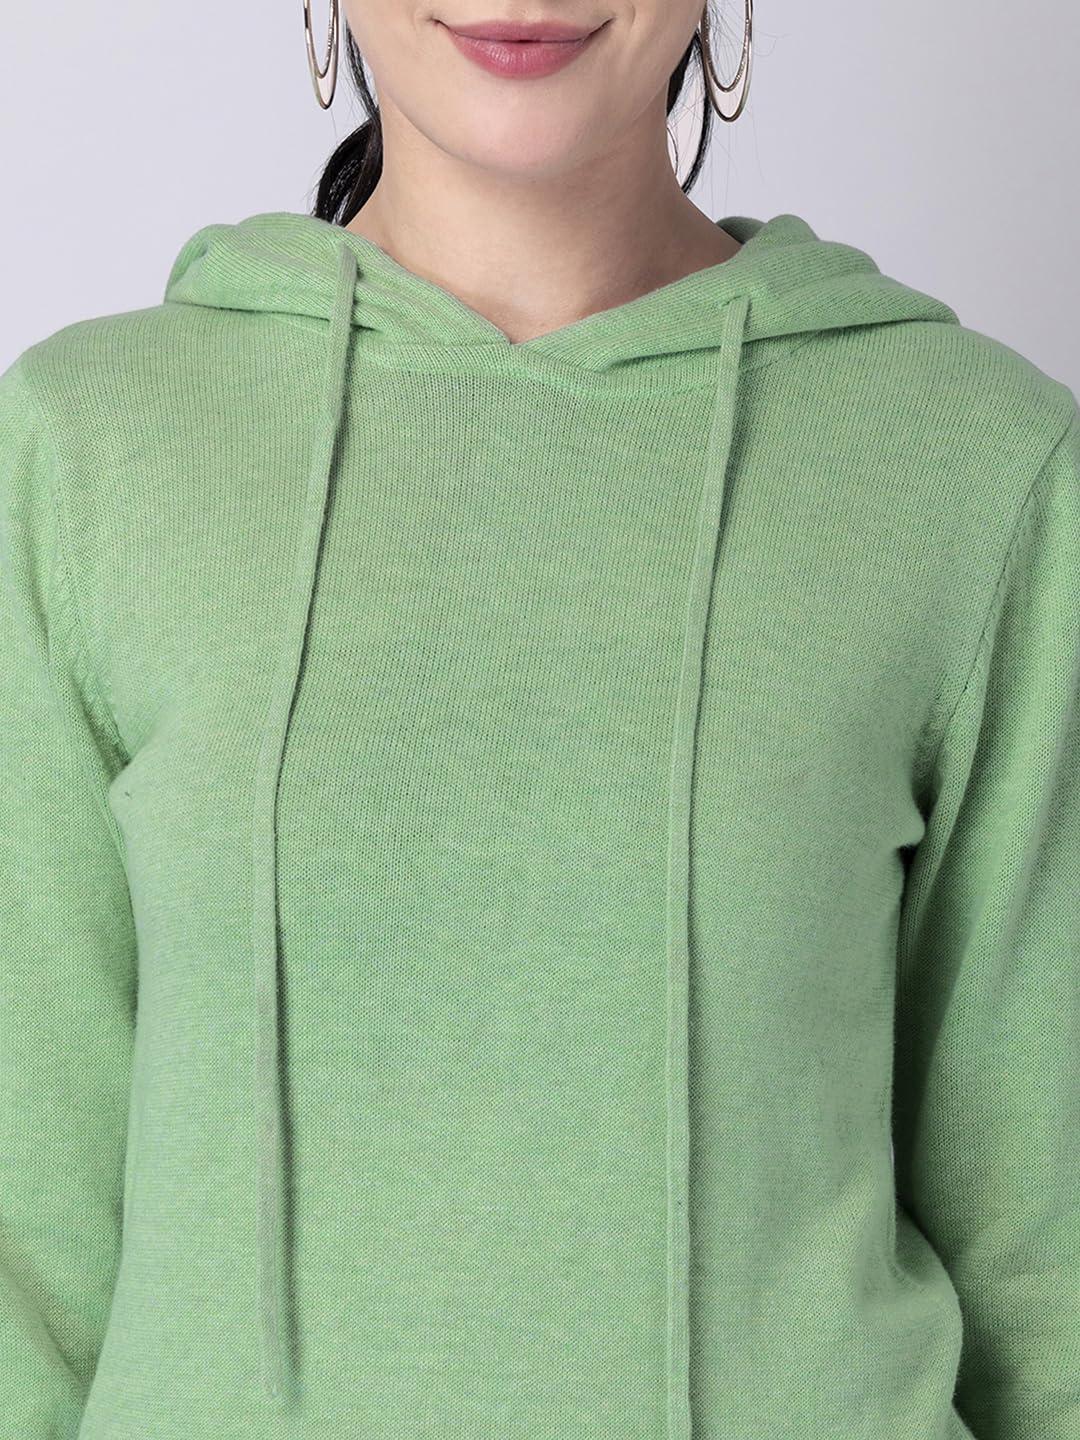 FabAlley Women's Cotton Hooded Neck Sweatshirt (SWT00409_Green_XL) 